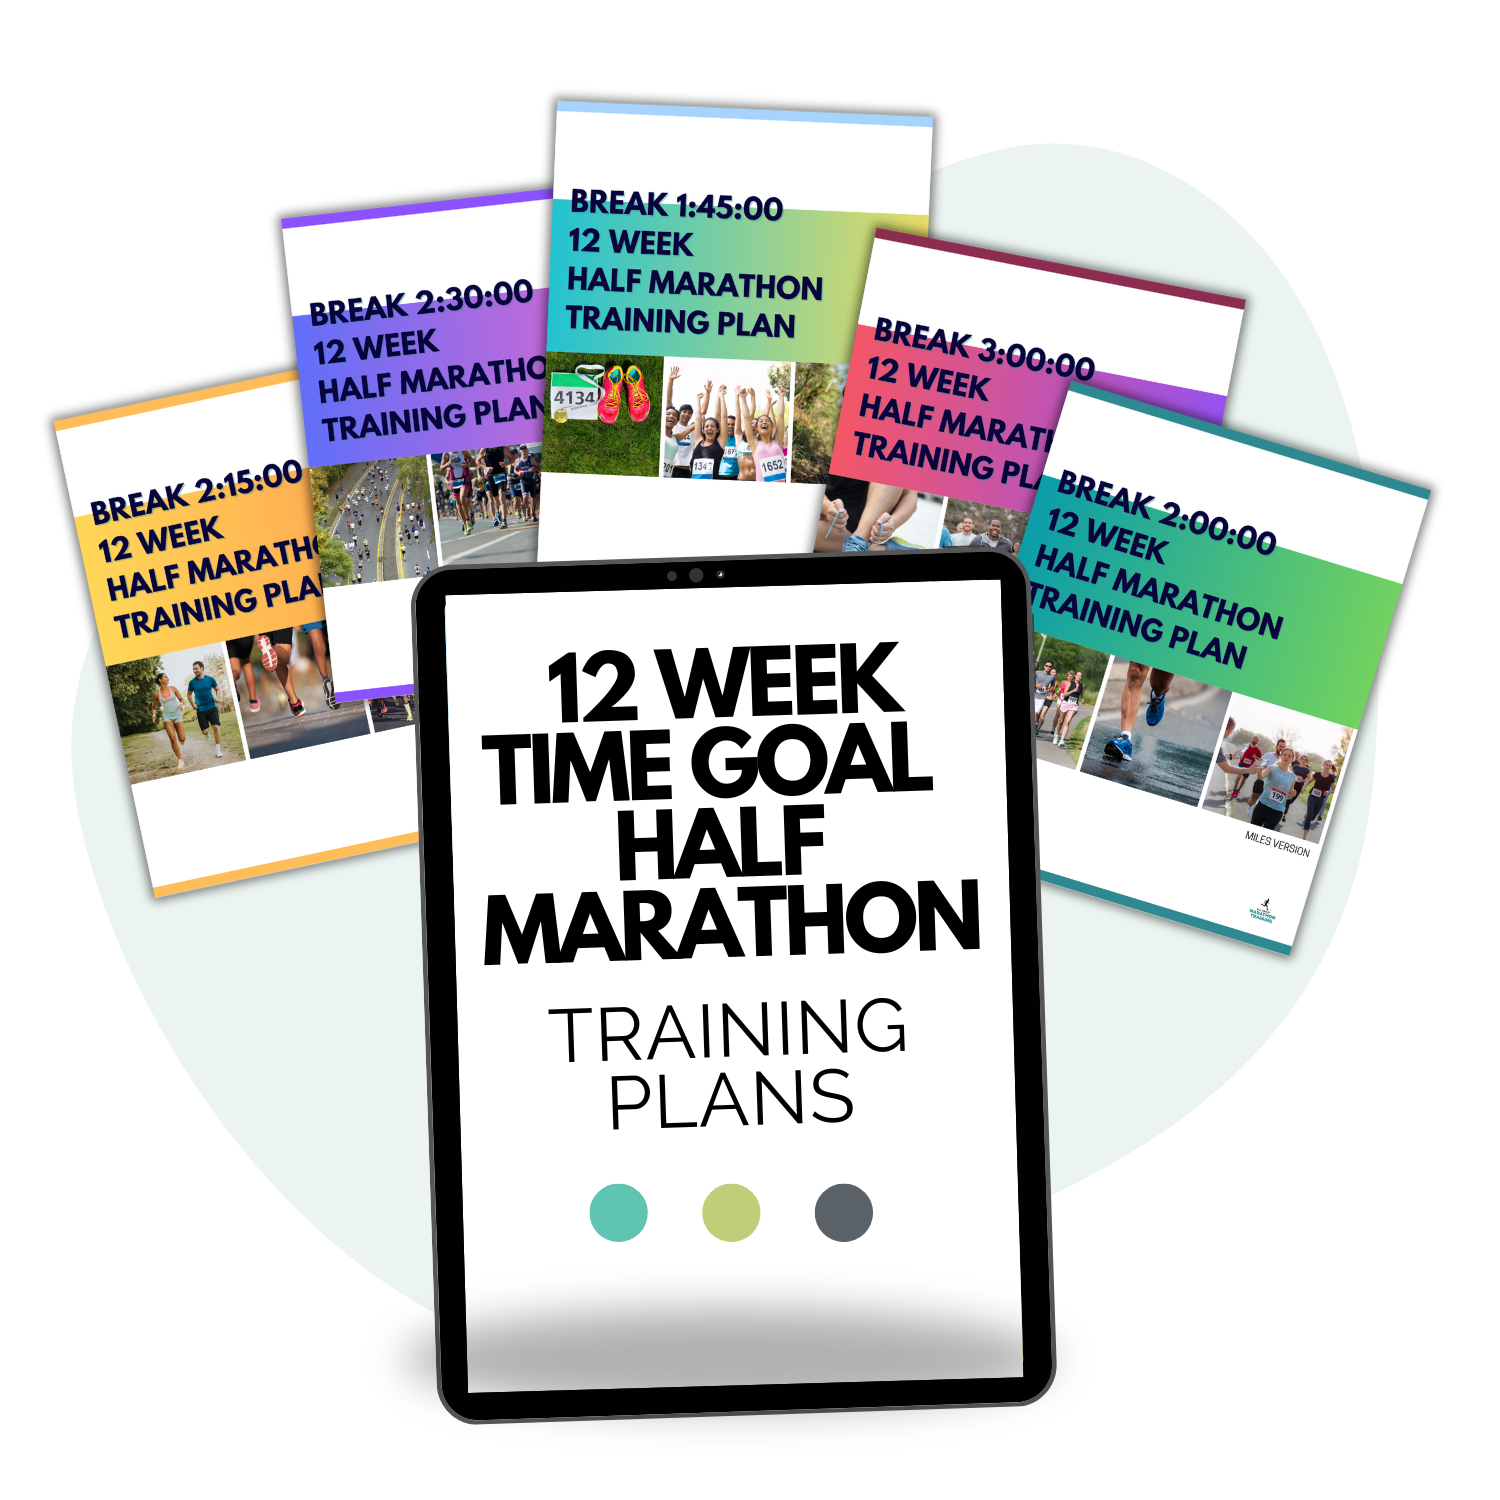 12 Week Half Marathon Training Schedule Finishing Time Goal Plans